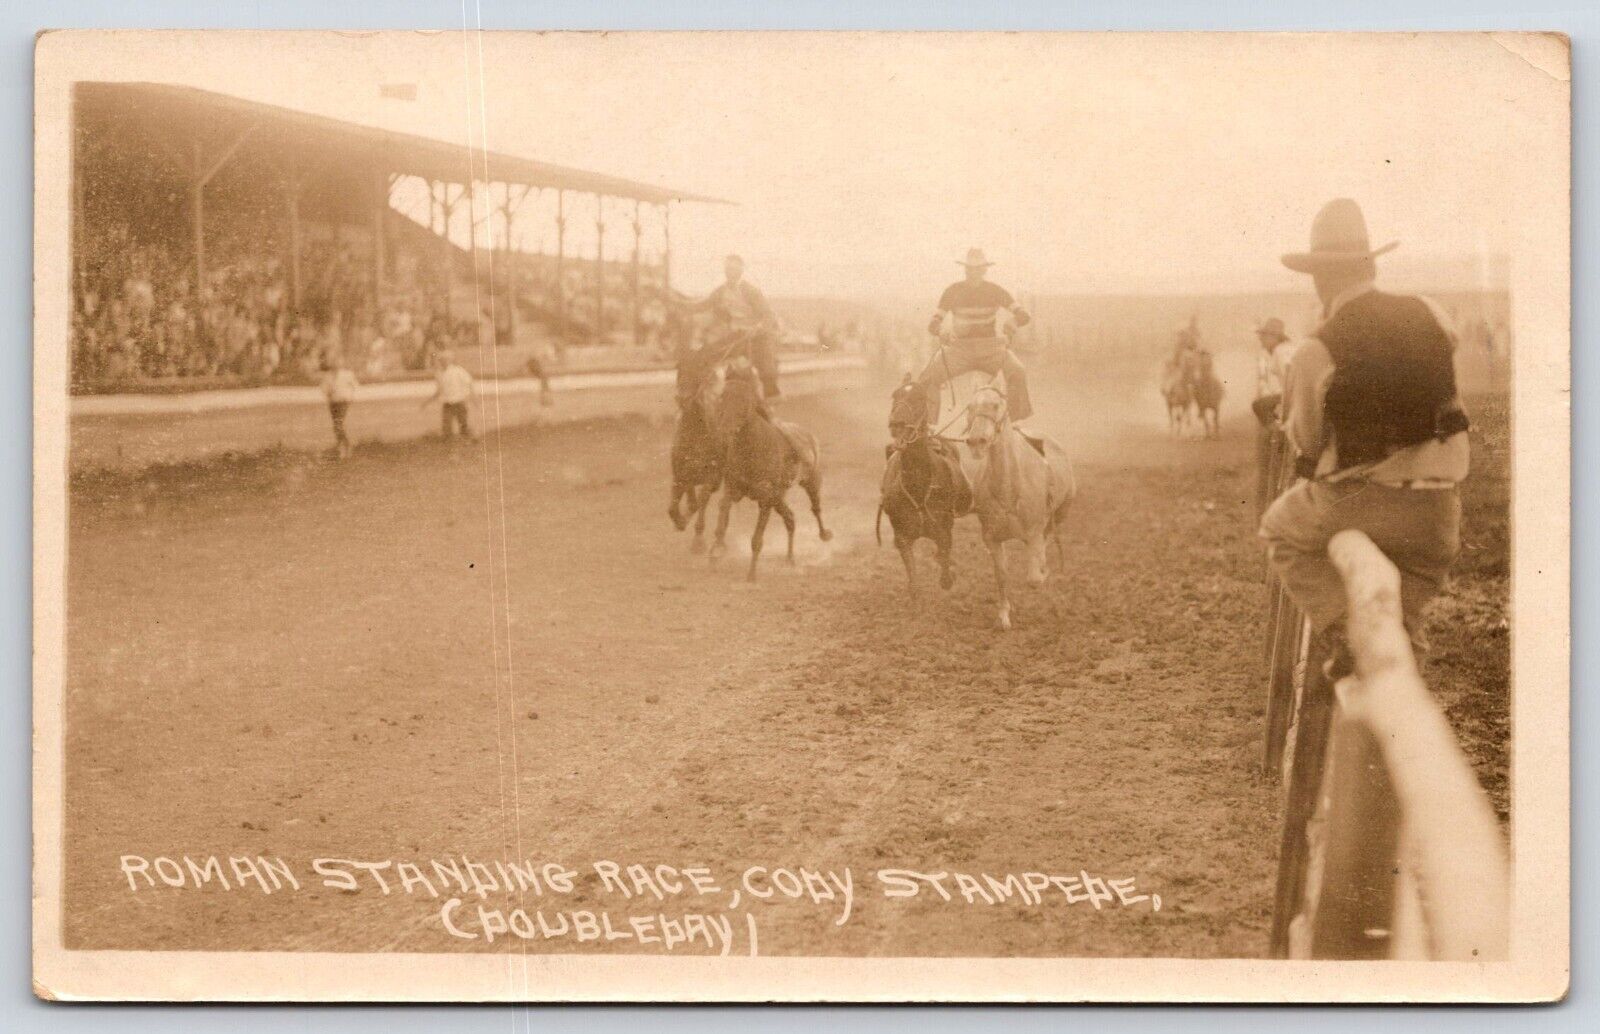 Wyoming Casper Roman Standing Race Cody Stampede Doubleplay Vintage Postcard